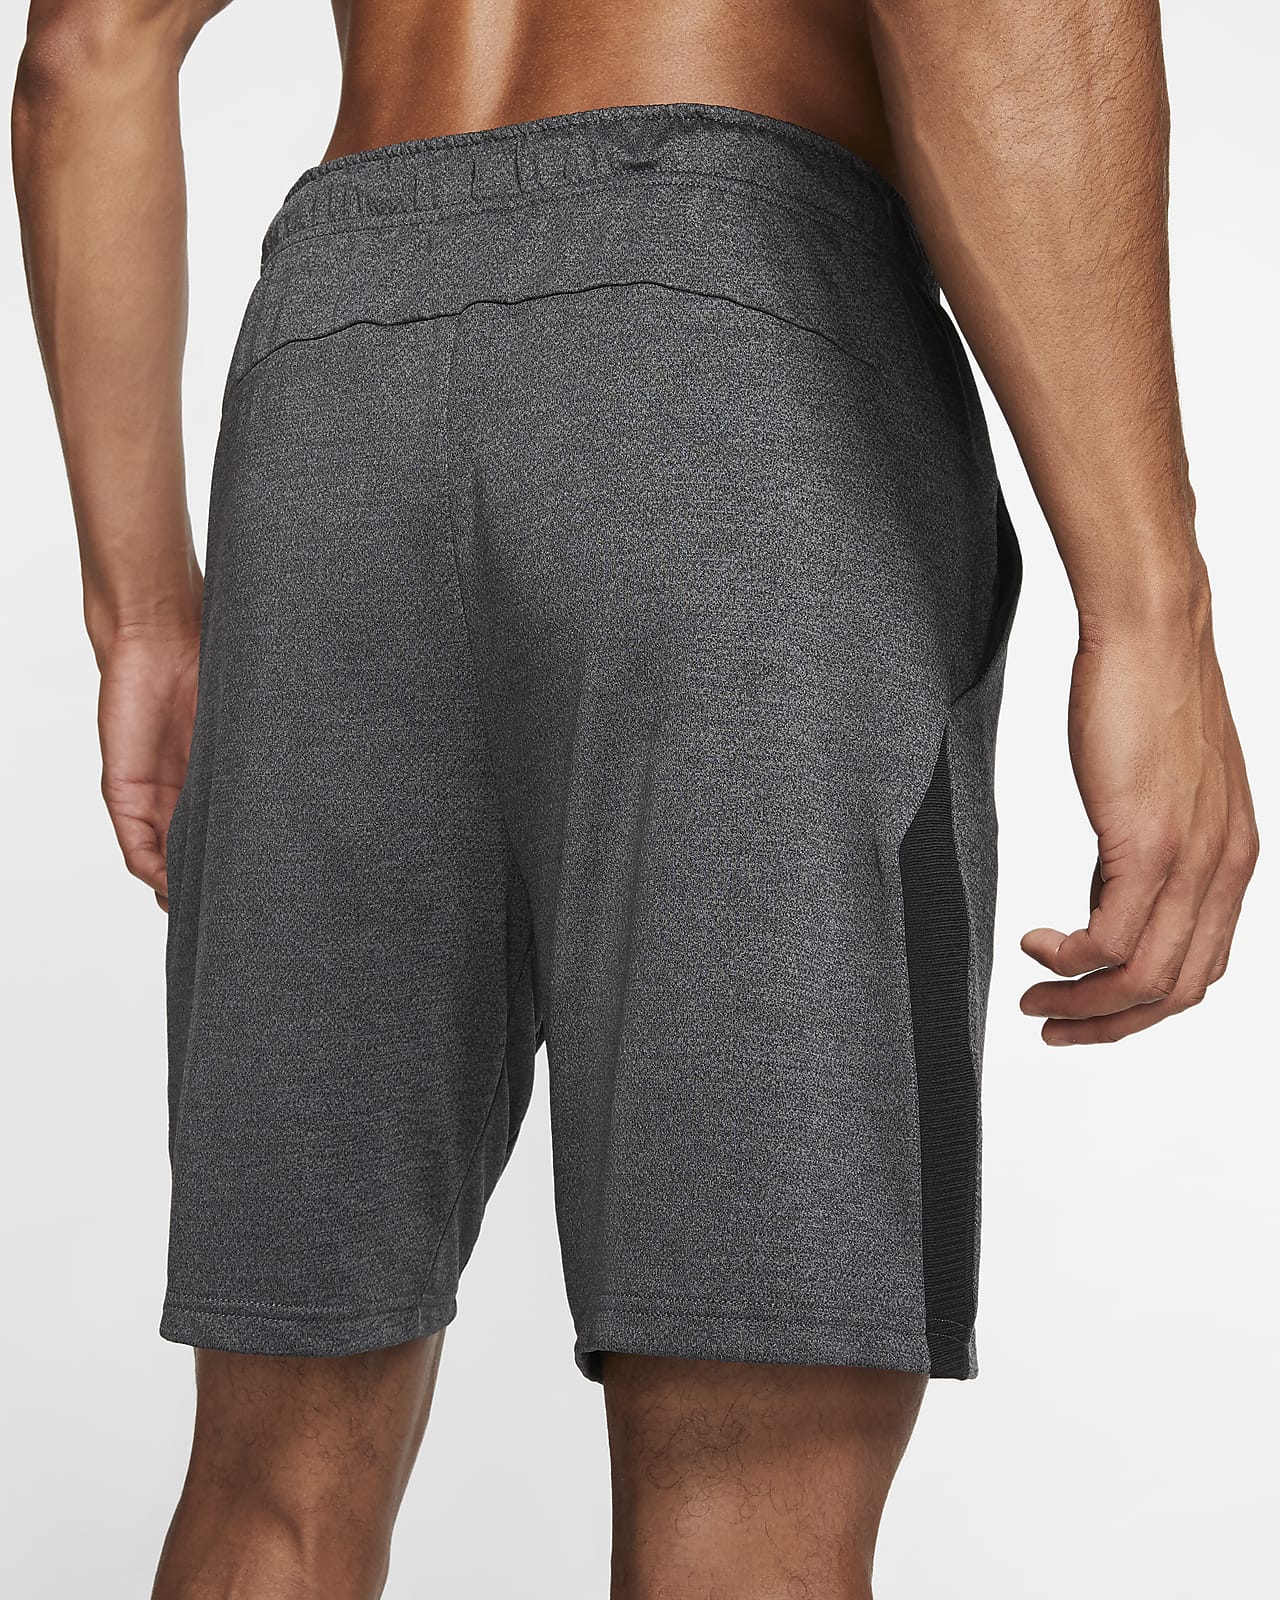 gray nike dri fit shorts